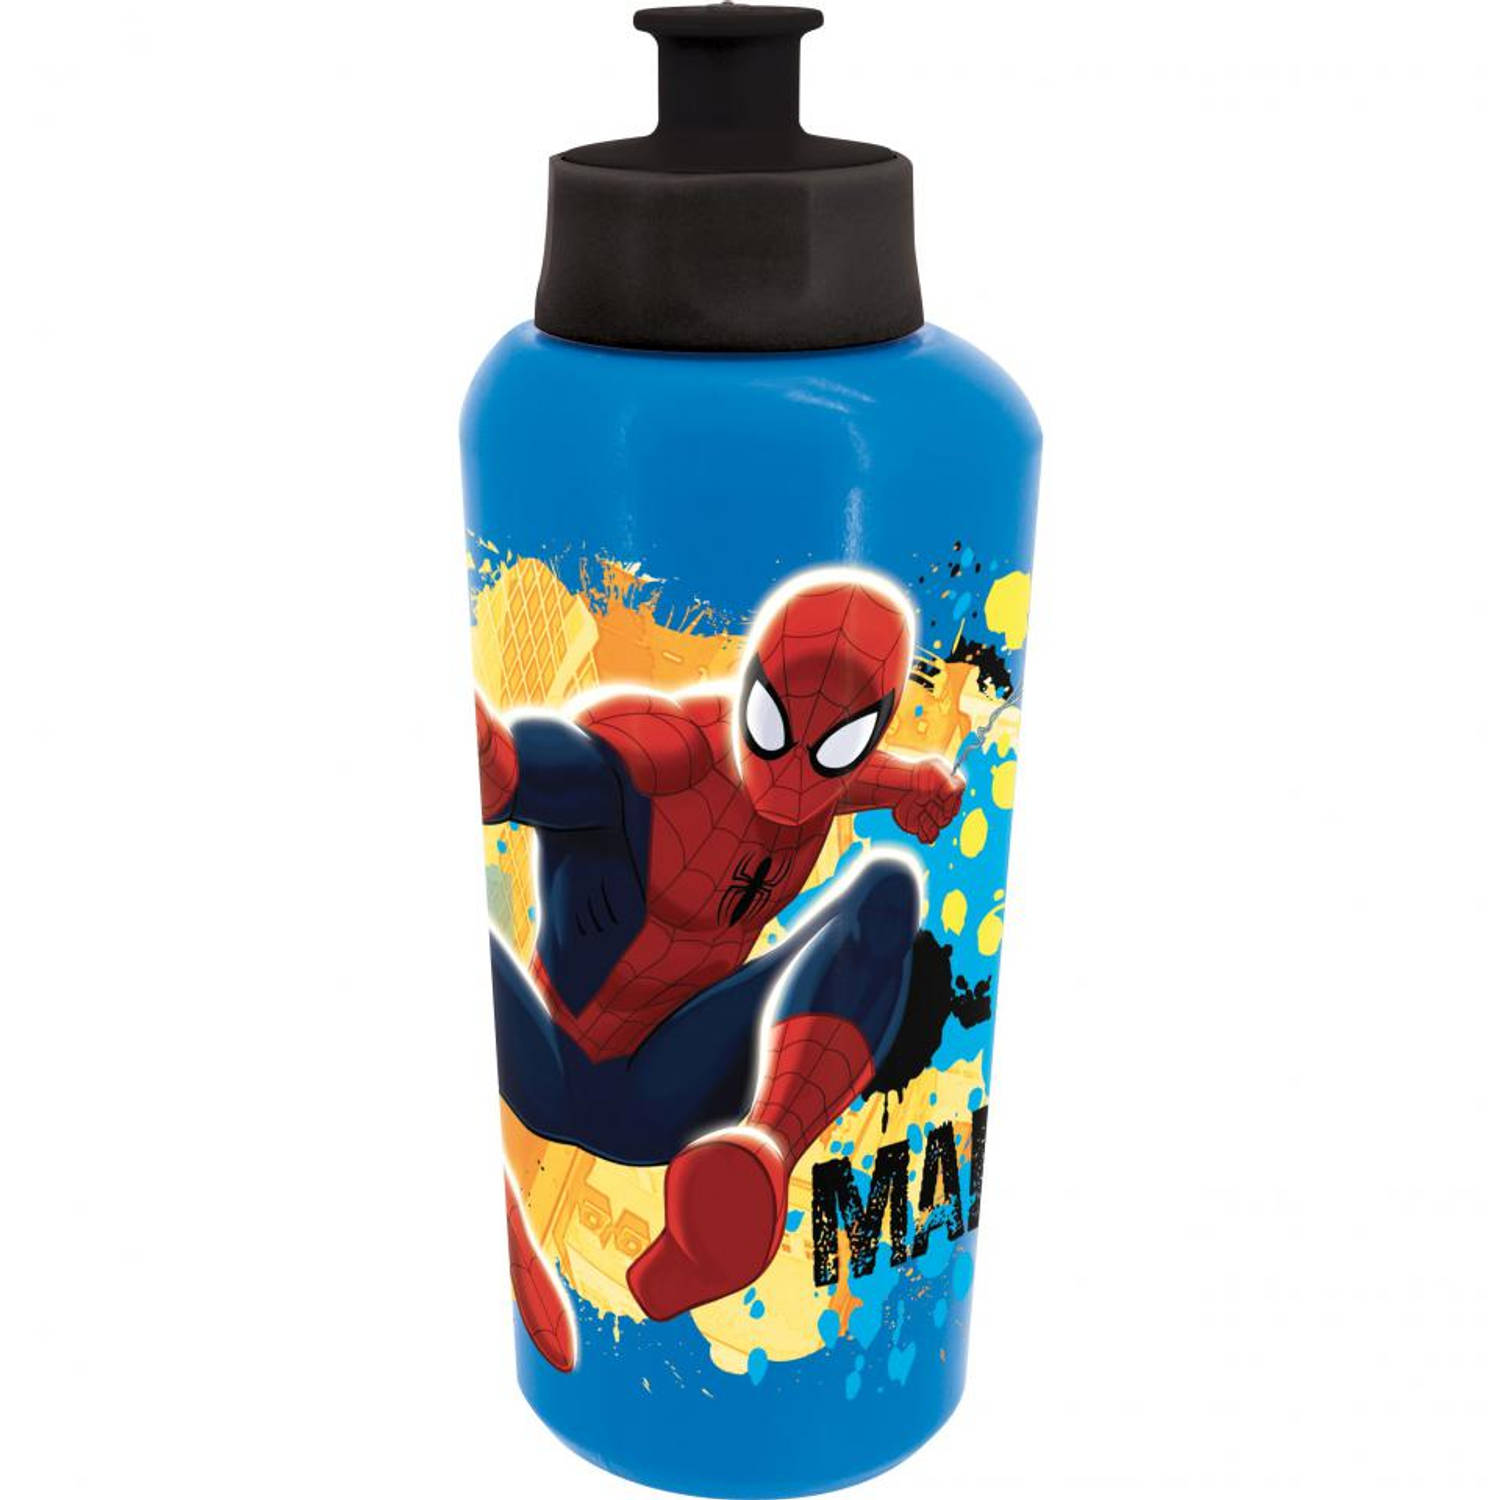 Trudeau Spiderman drinkbeker - 350 ml